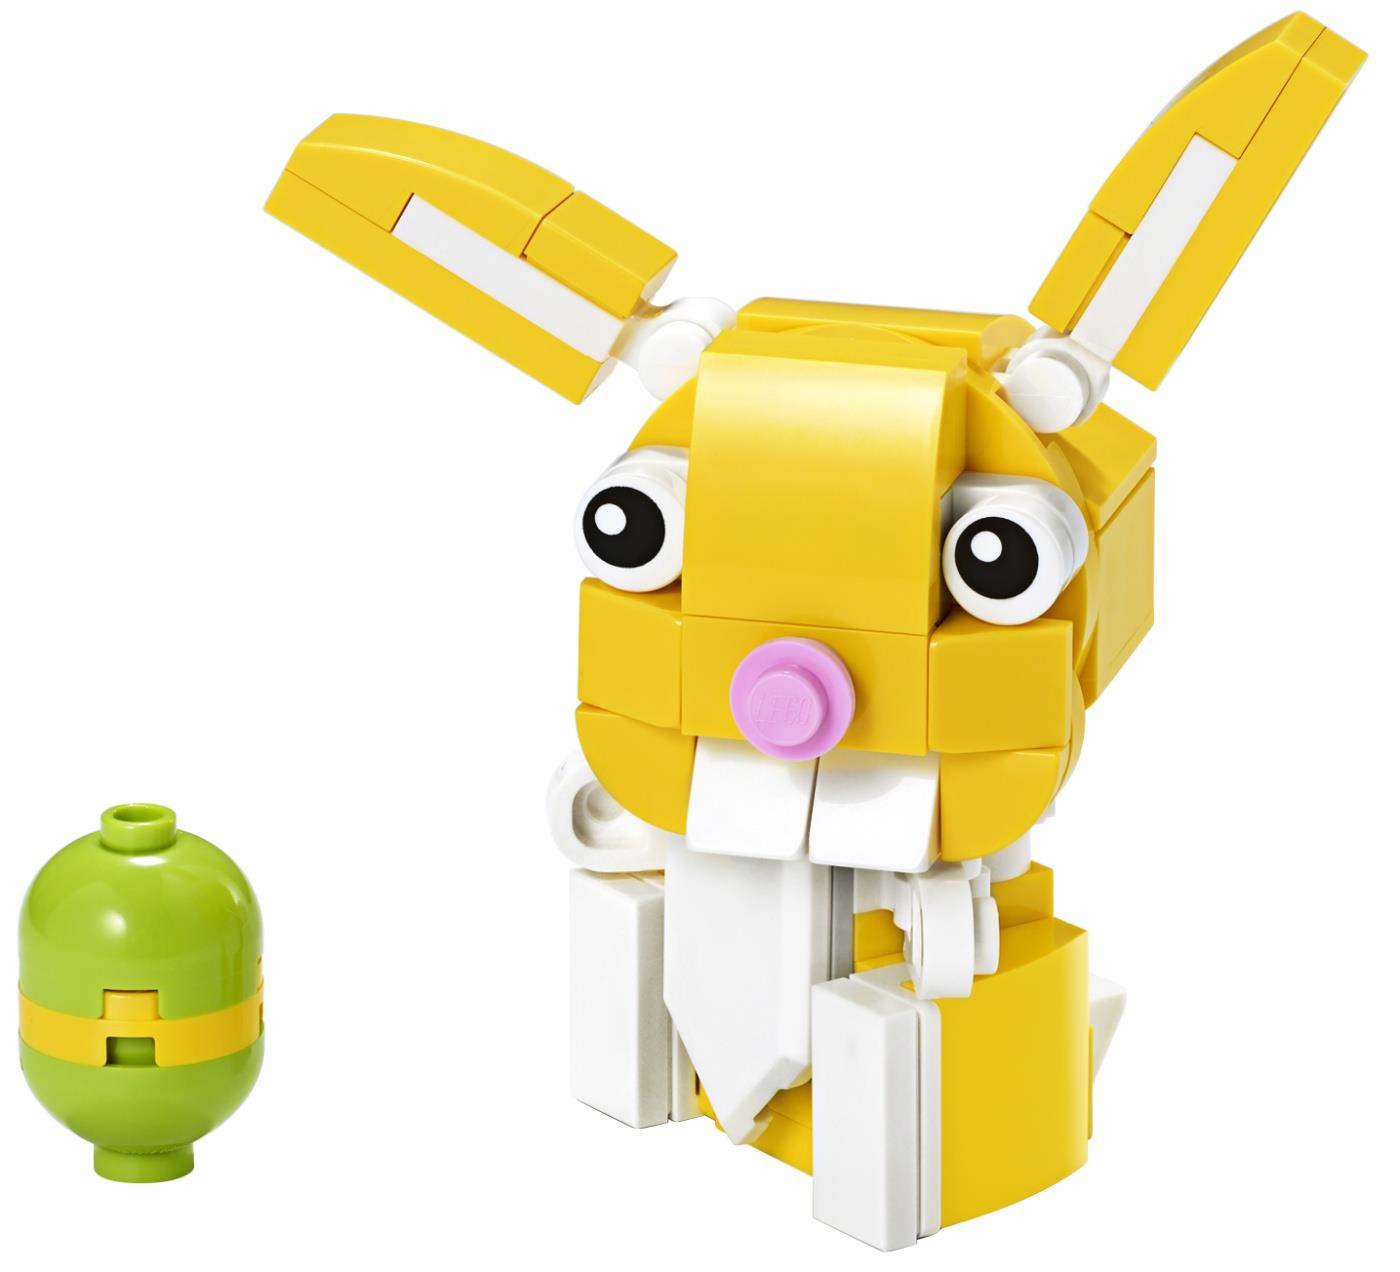 LEGO HOLIDAY 40463 Easter Bunny NISB New & Sealed 